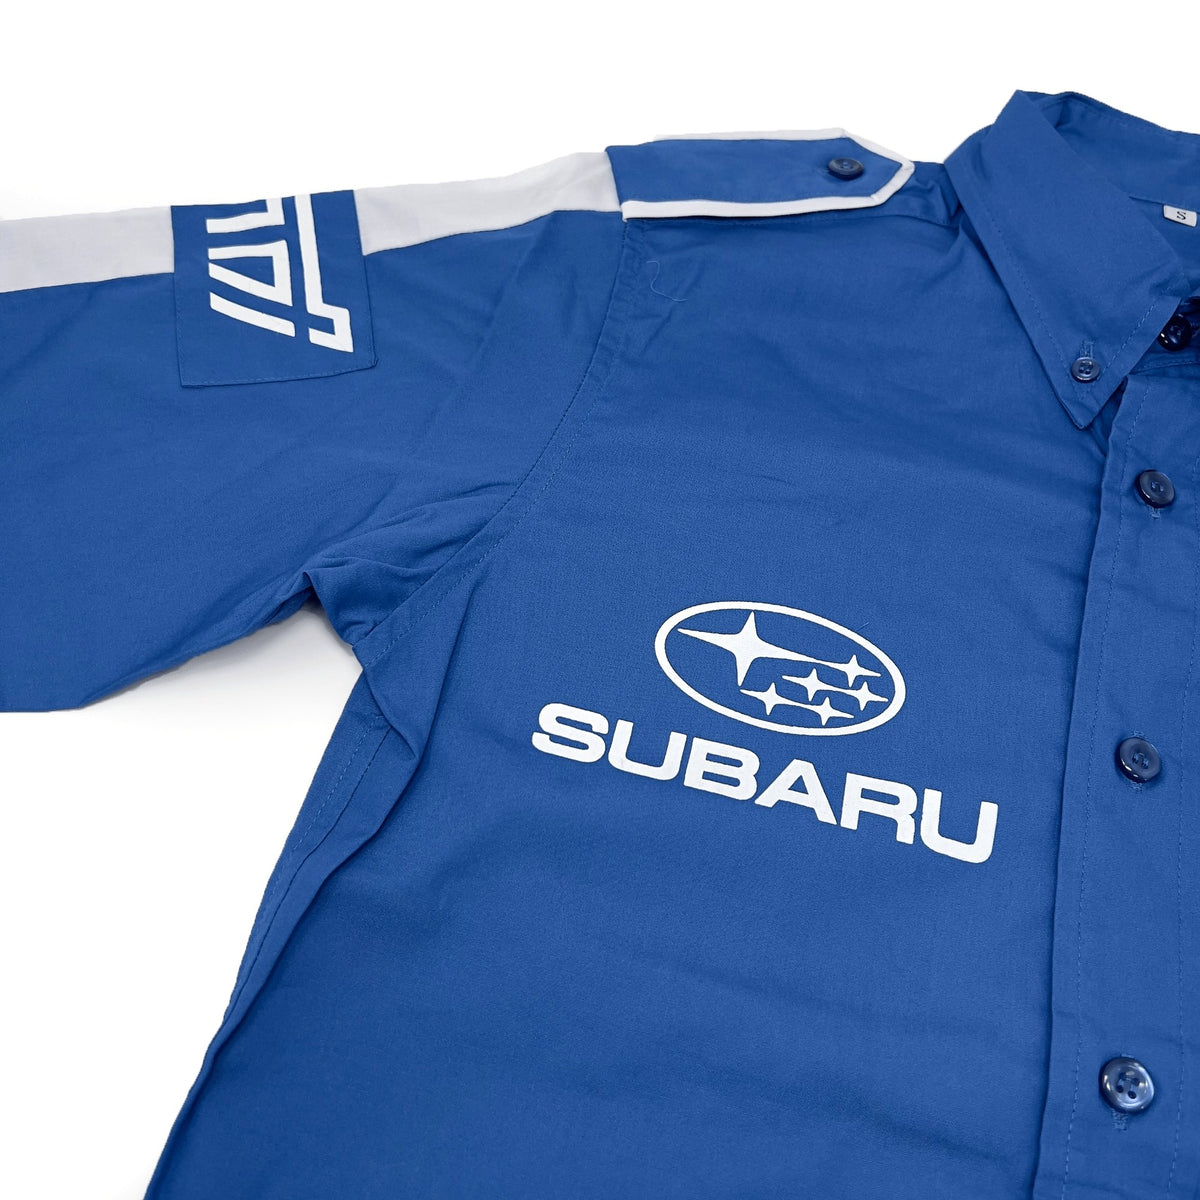 Japan JDM Subaru World Rally Team WRC STi Button Up Long Sleeve Shirt - Sugoi JDM